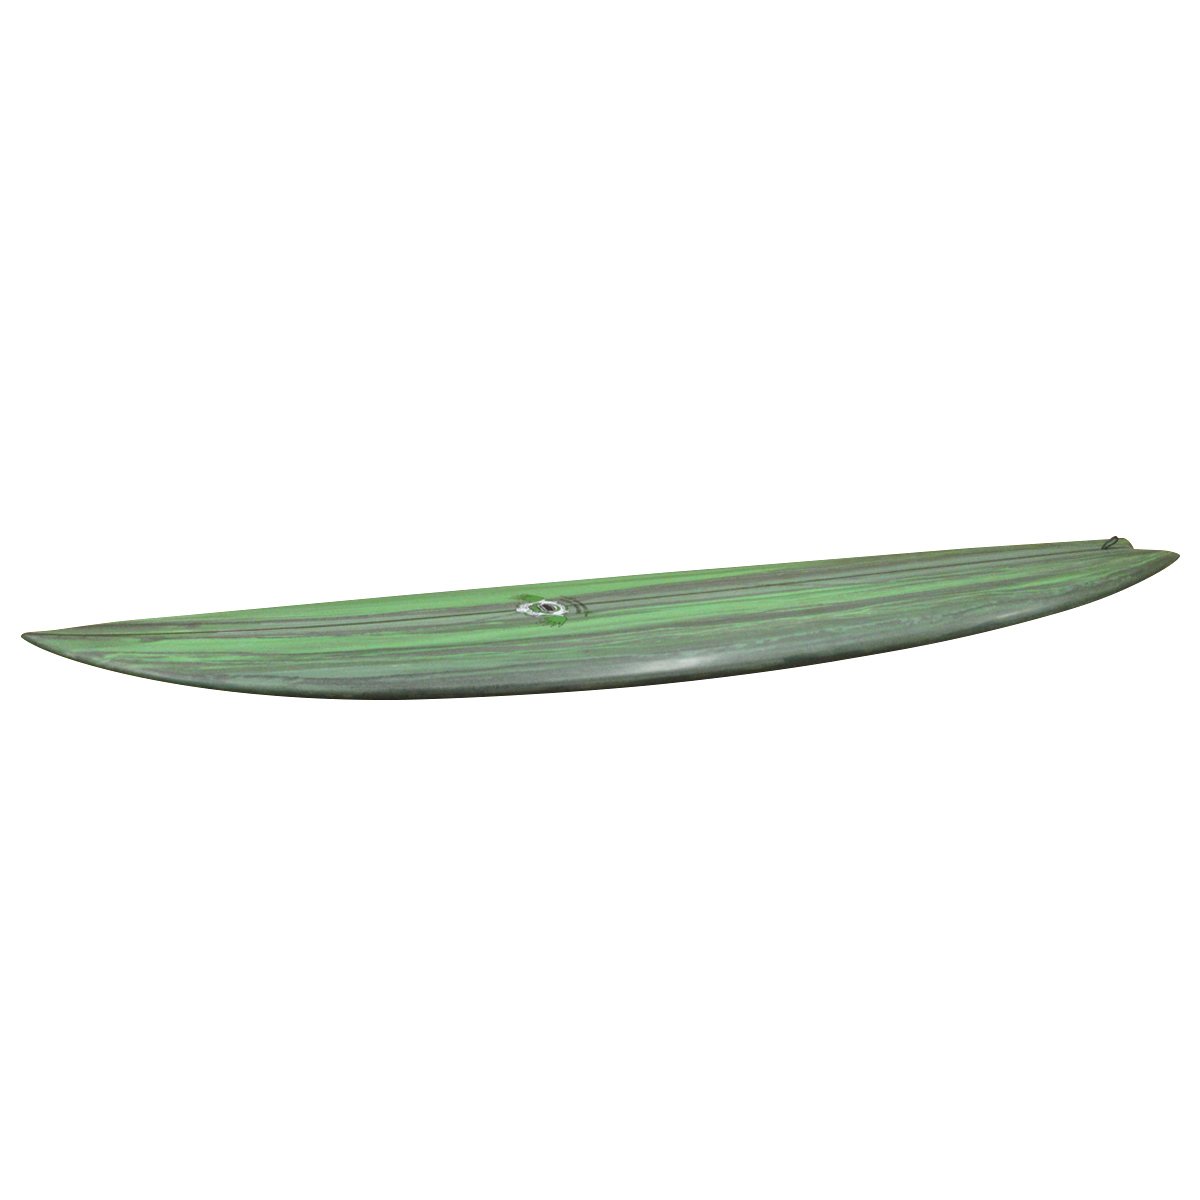 LARRY MABILE SURFBOARDS / BIG SWALLOW 8`3